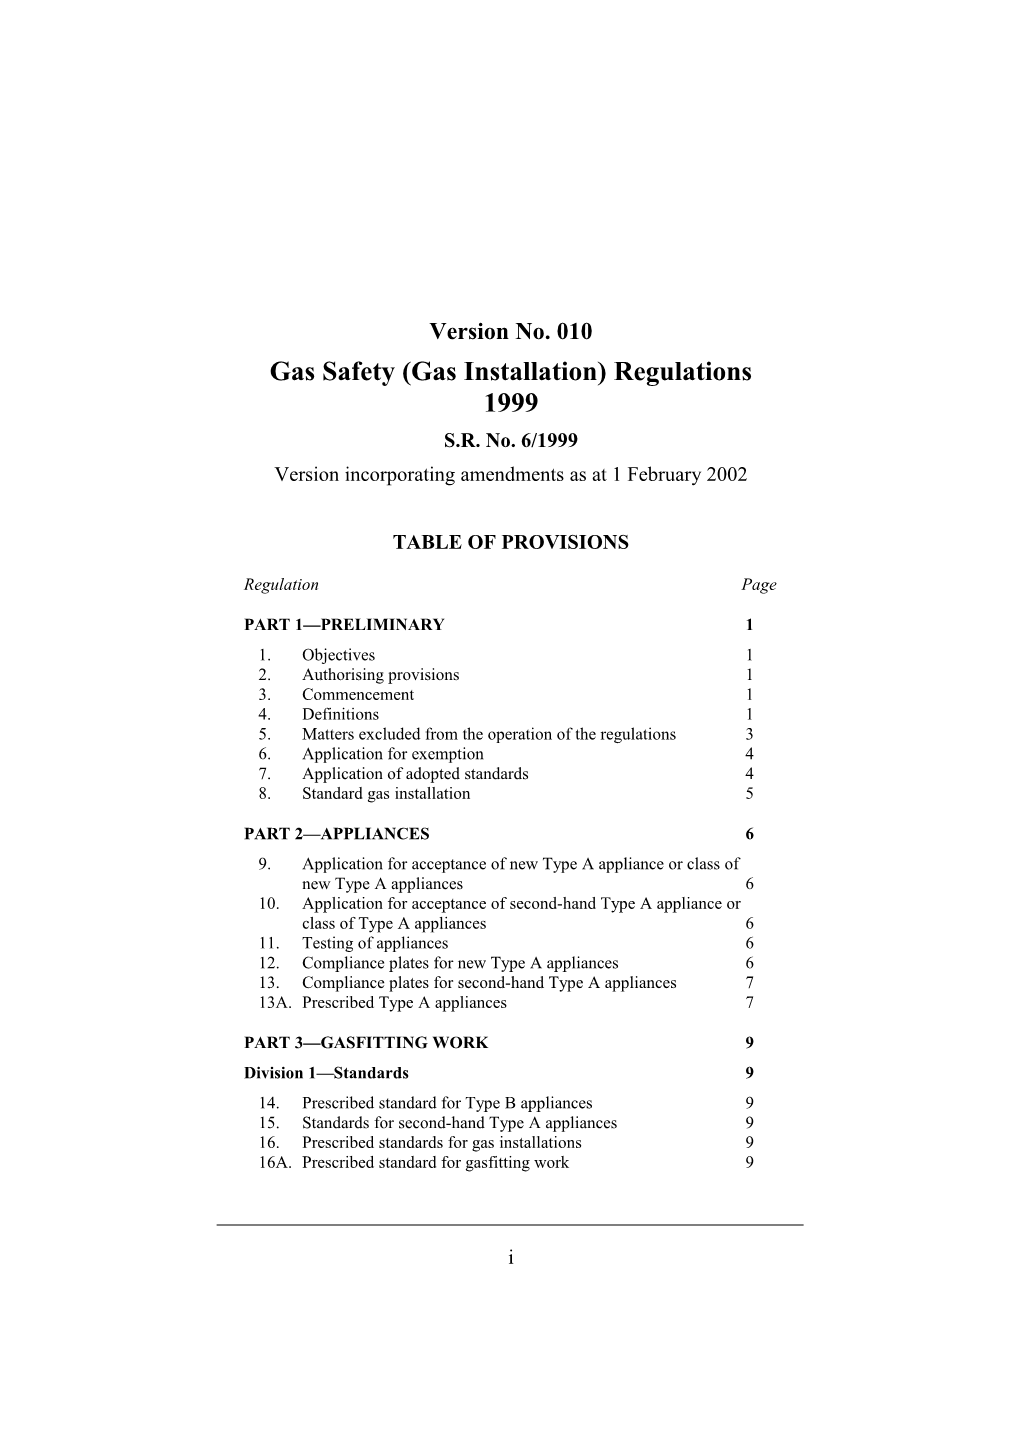 Gas Safety (Gas Installation) Regulations 1999